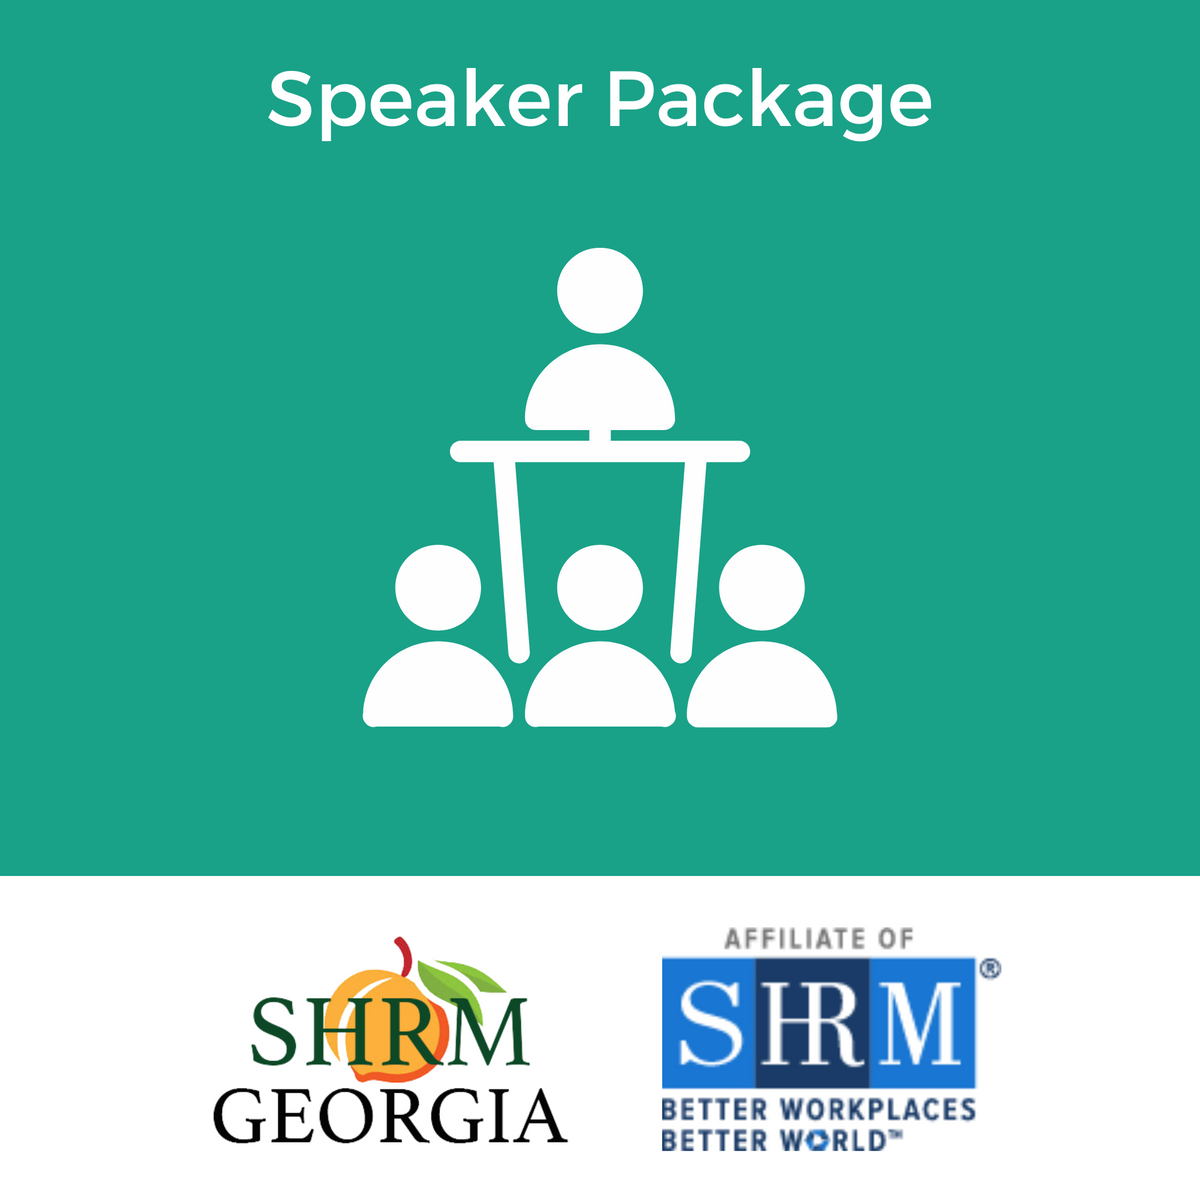 23 GA SHRM Law Conference - Speaker Package